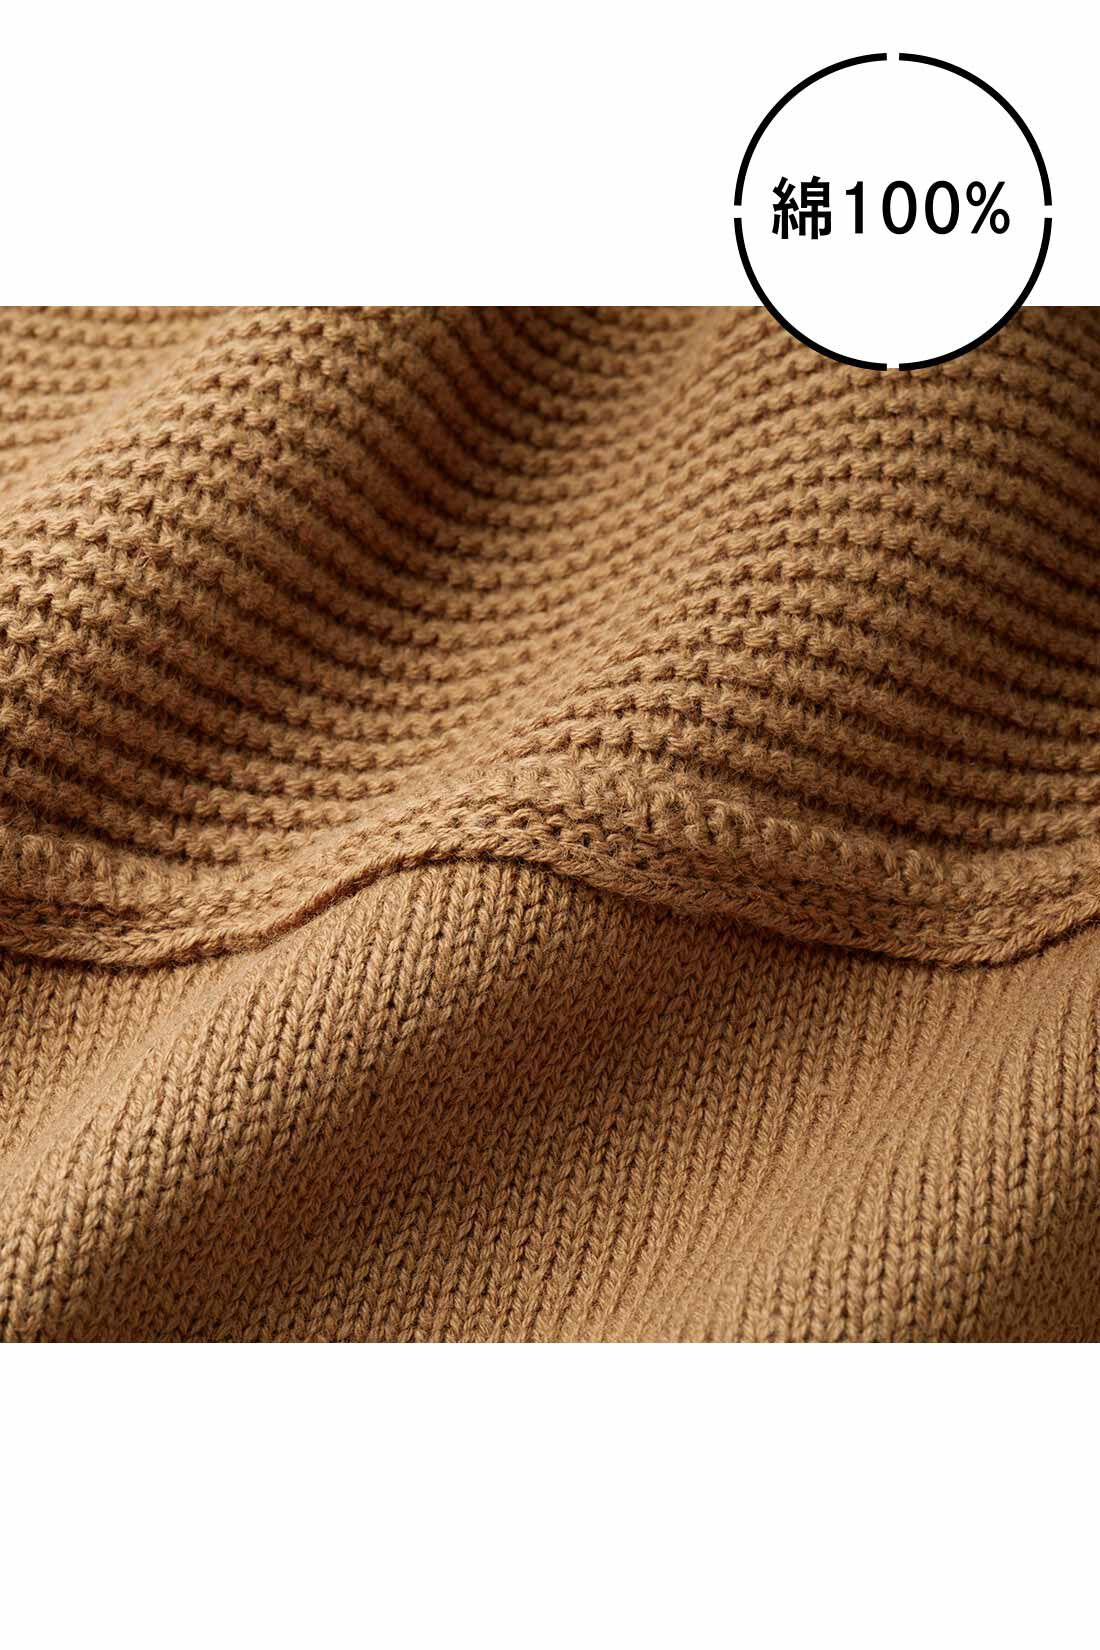 IEDIT|IEDIT[イディット]　コットン素材のハンサムデザインニットの会|ミドルゲージの編み地やVネックは女っぽく、色はキリっとハンサム。シンプルなセーターなのに肩から背中のガーター編みや、切り替えのアウトキリングがこなれ感を放つから、着るだけでサマになるんです。